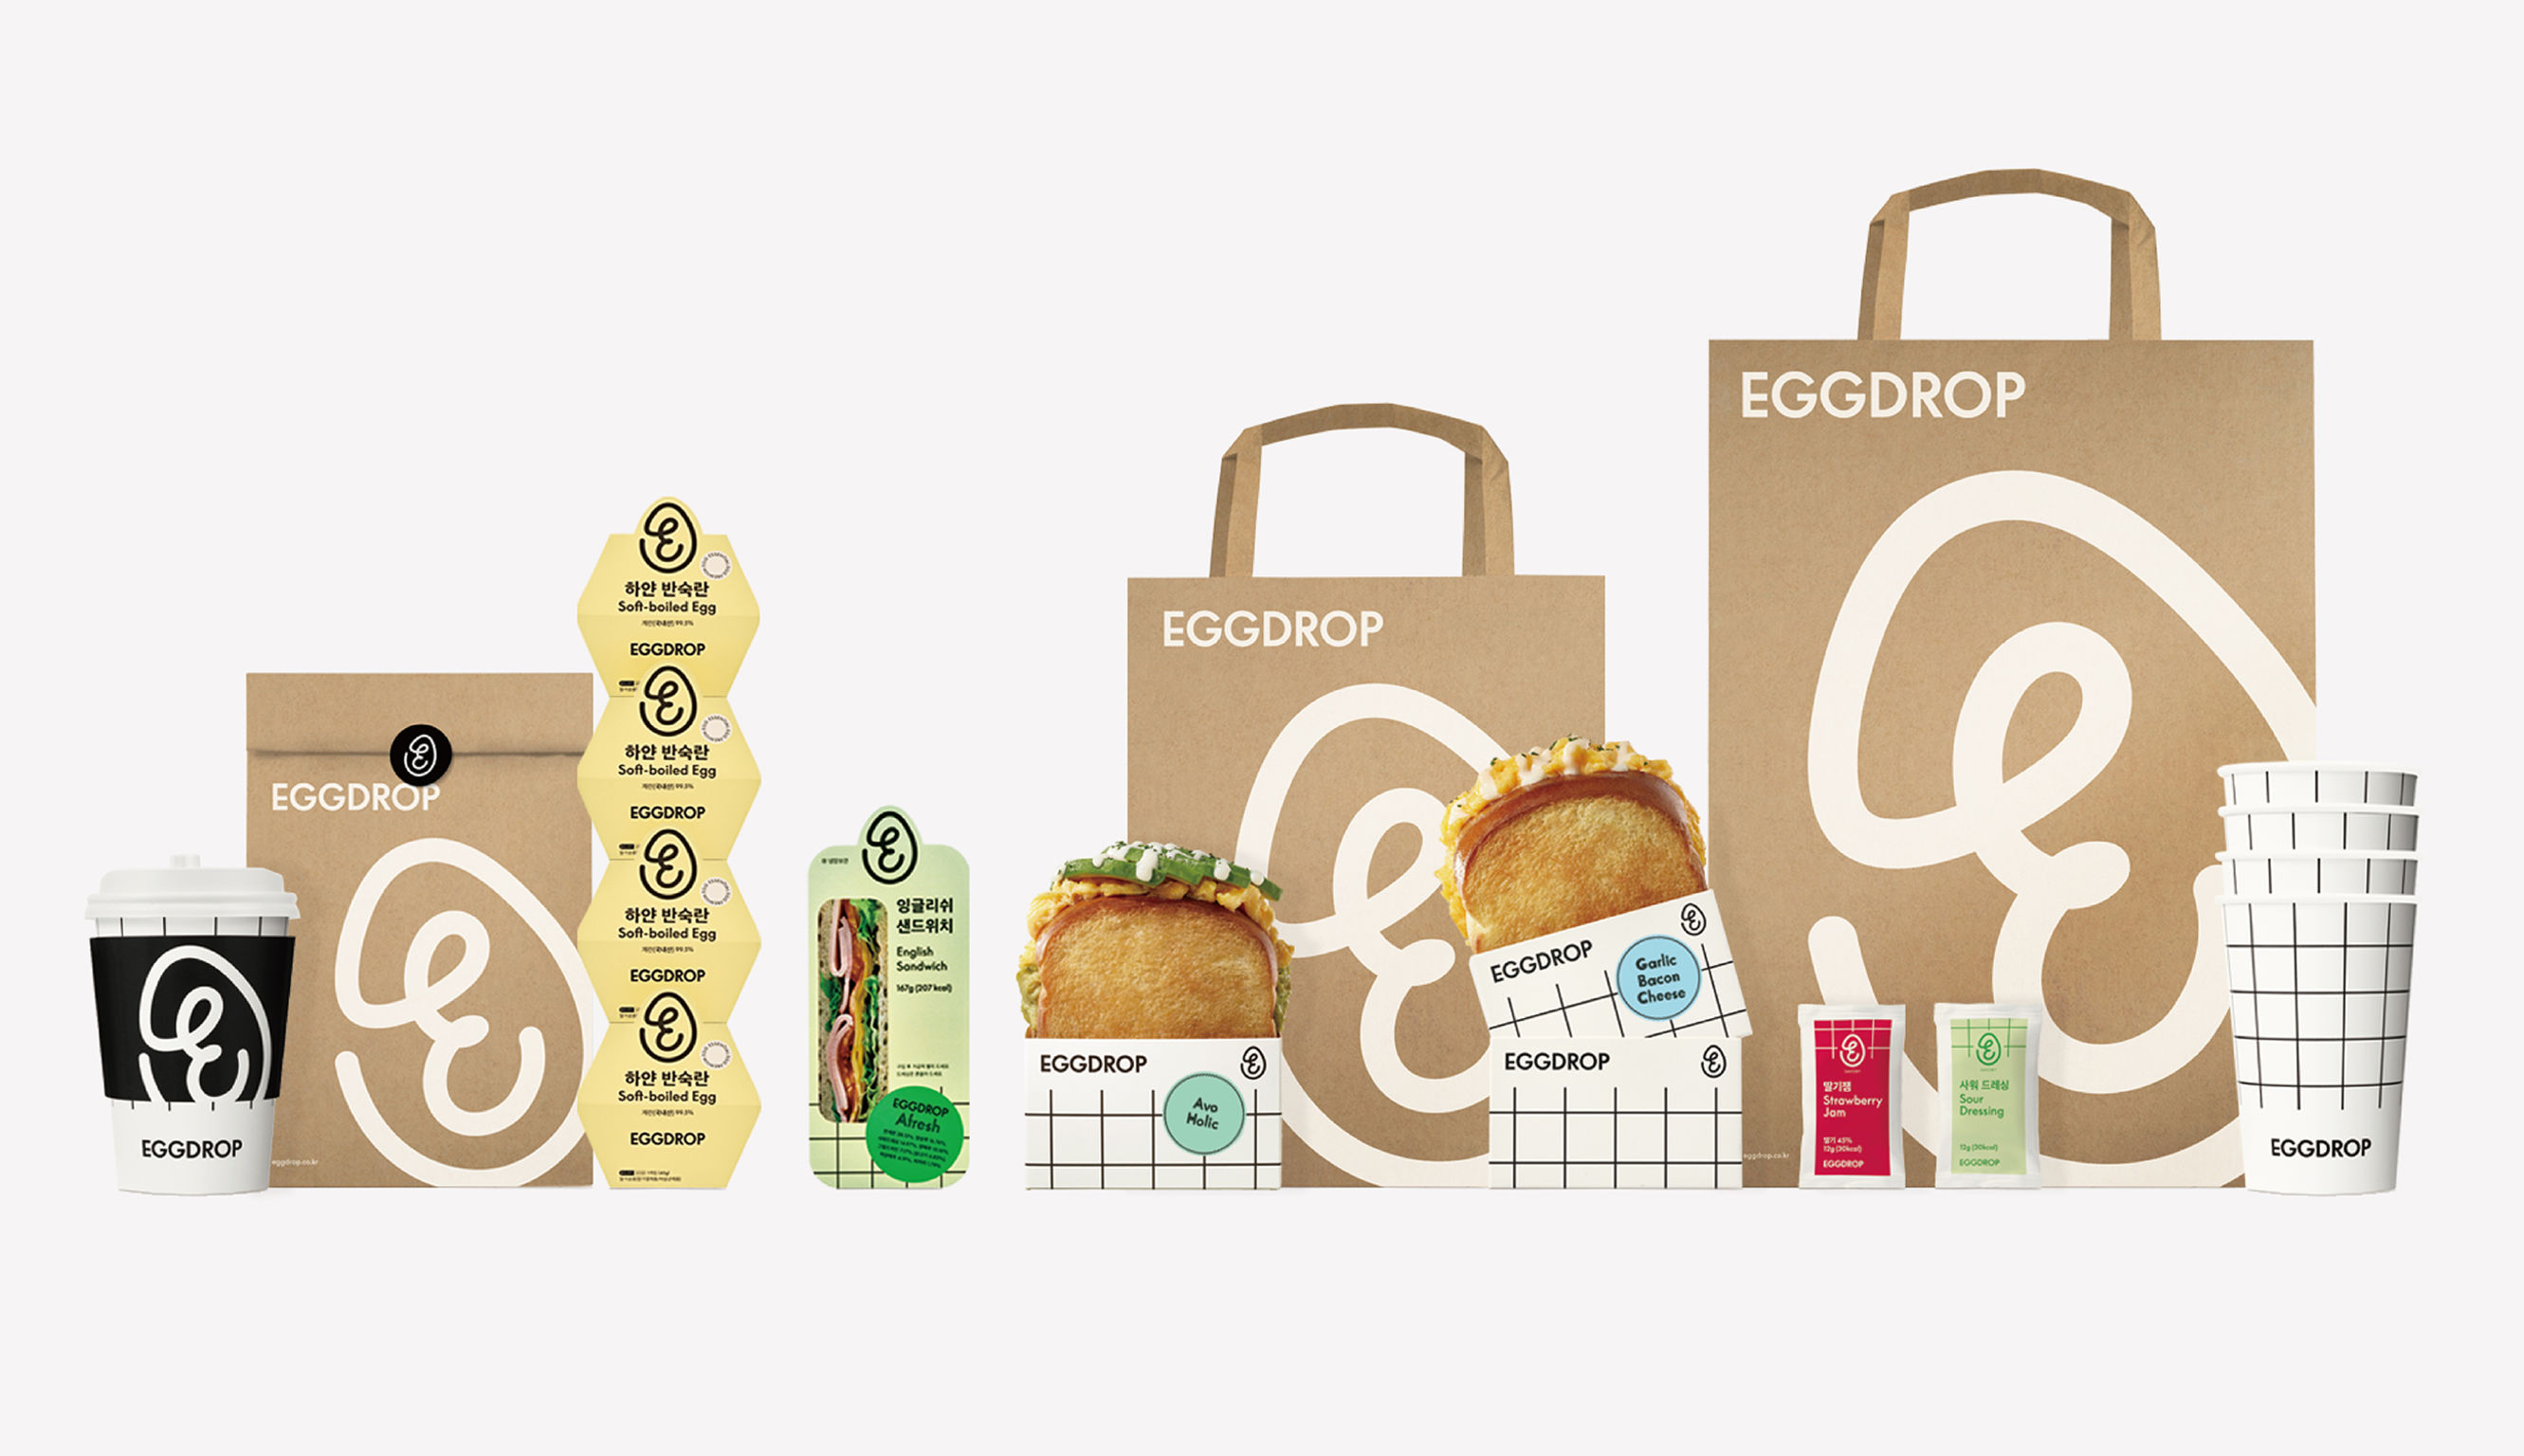 EGGDROP identity branding, healthy sandwich franchise